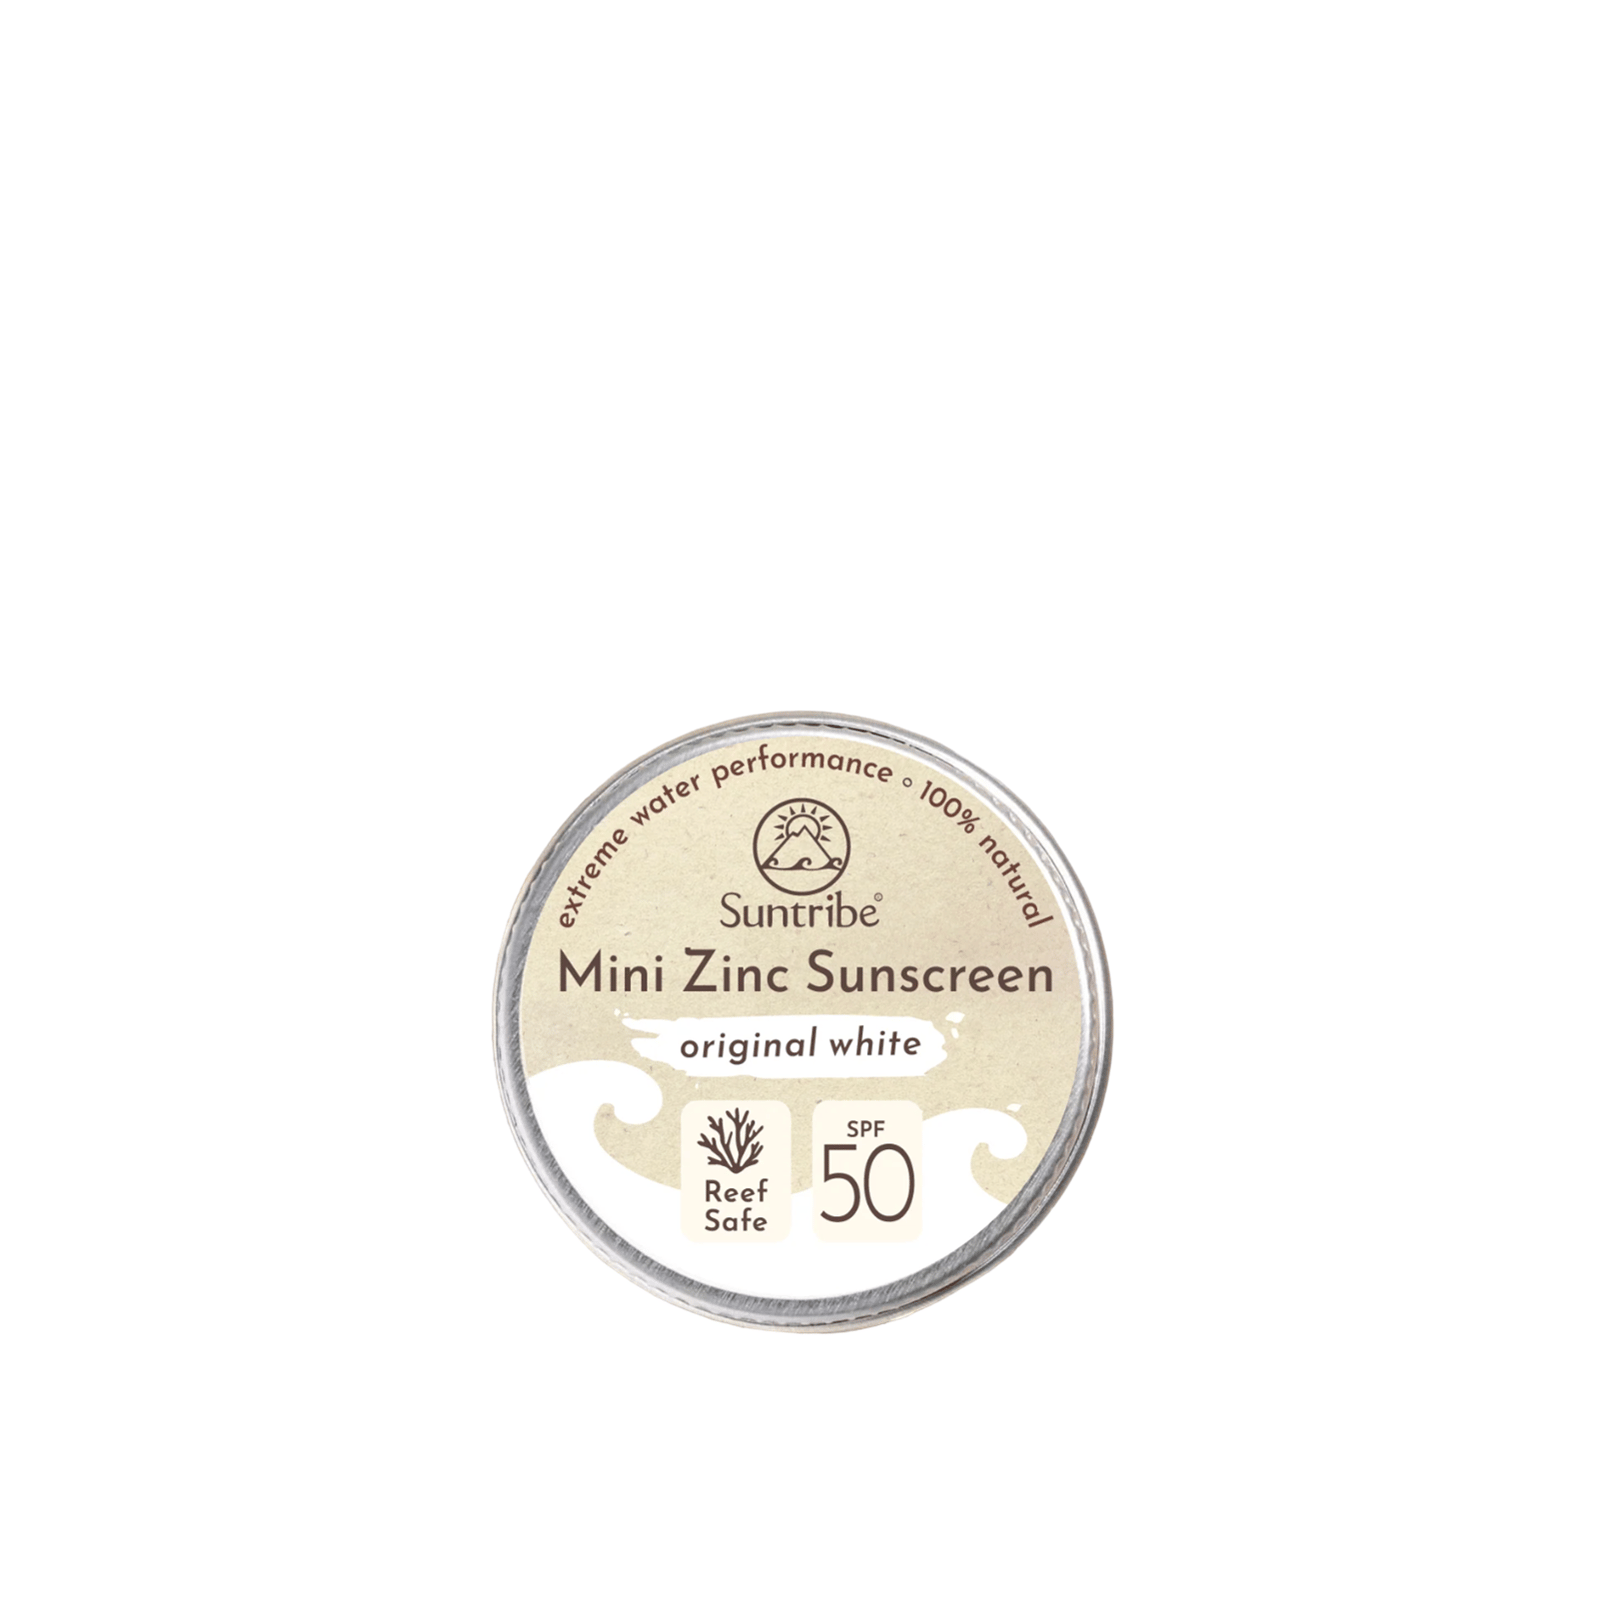 Suntribe Mini Zinc Sunscreen SPF50 Original White 15g (0.52oz)